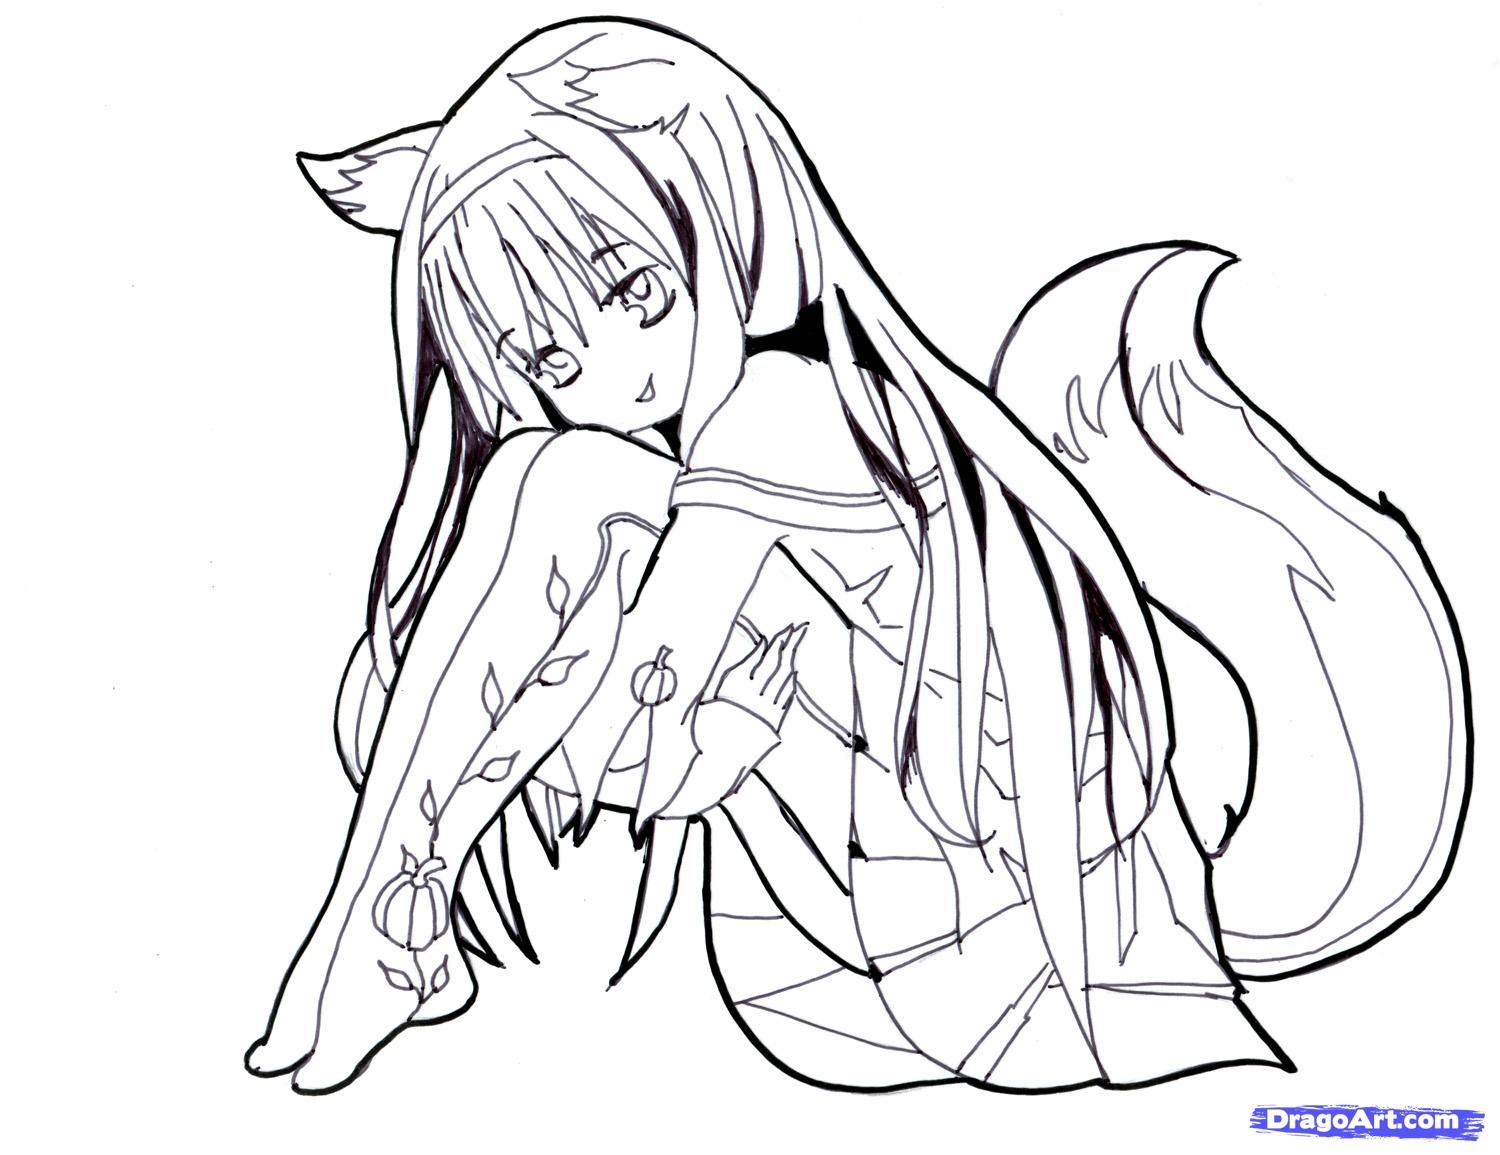 Cute anime wolf girl | Cute fox drawing, Anime wolf girl, Anime wolf drawing